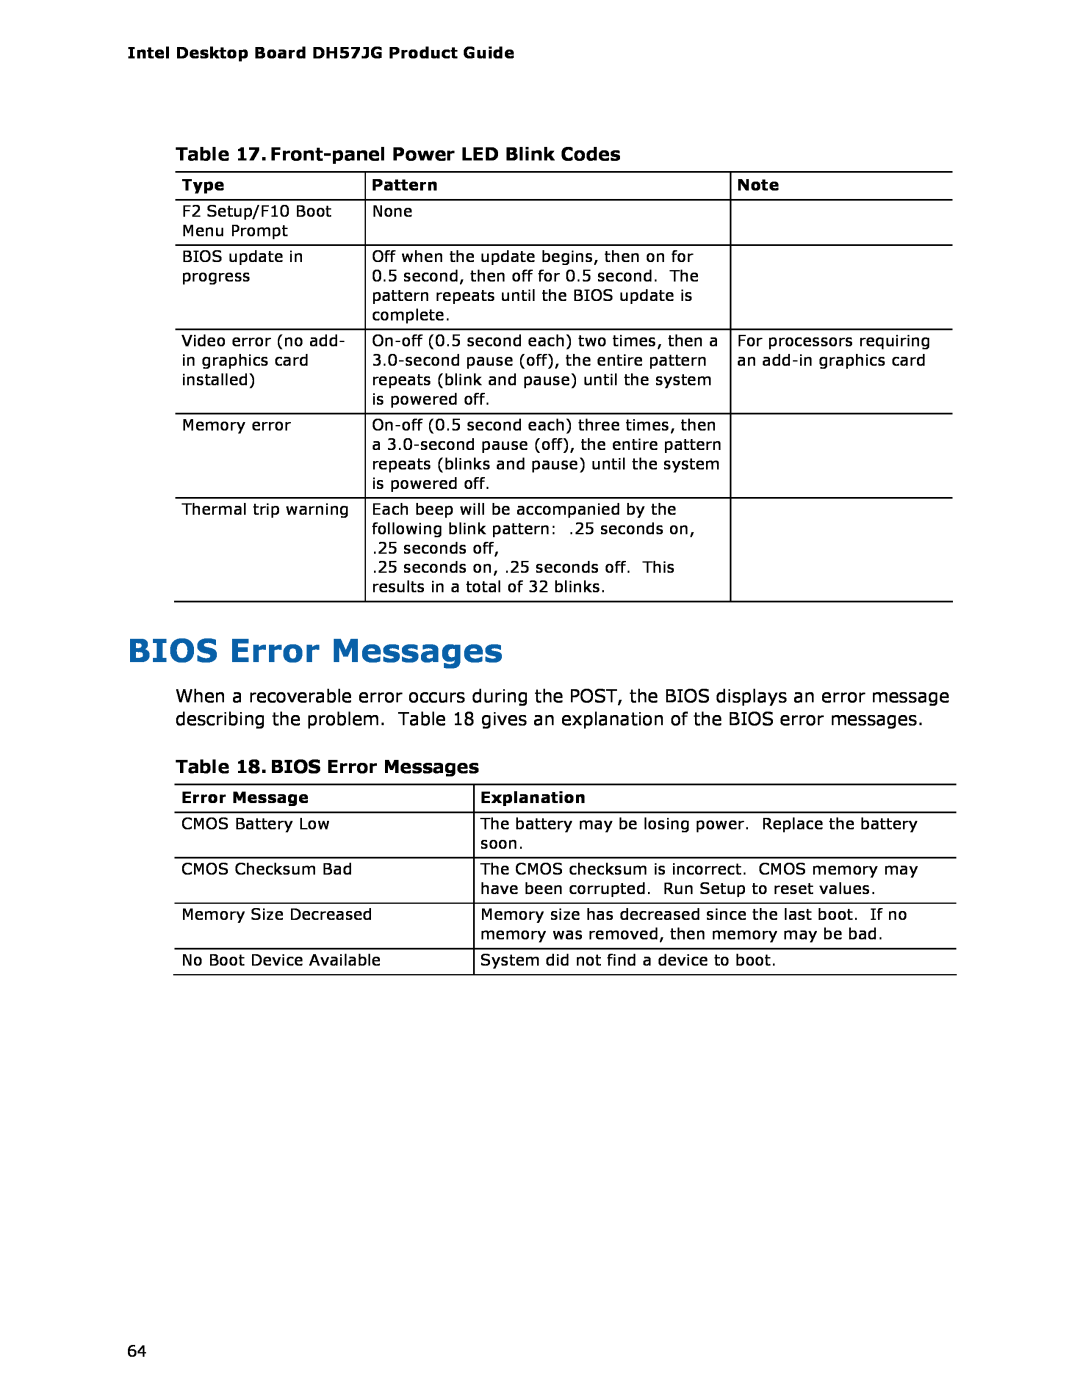 Intel BLKDH57JG BIOS Error Messages, Front-panel Power LED Blink Codes, Intel Desktop Board DH57JG Product Guide, Type 